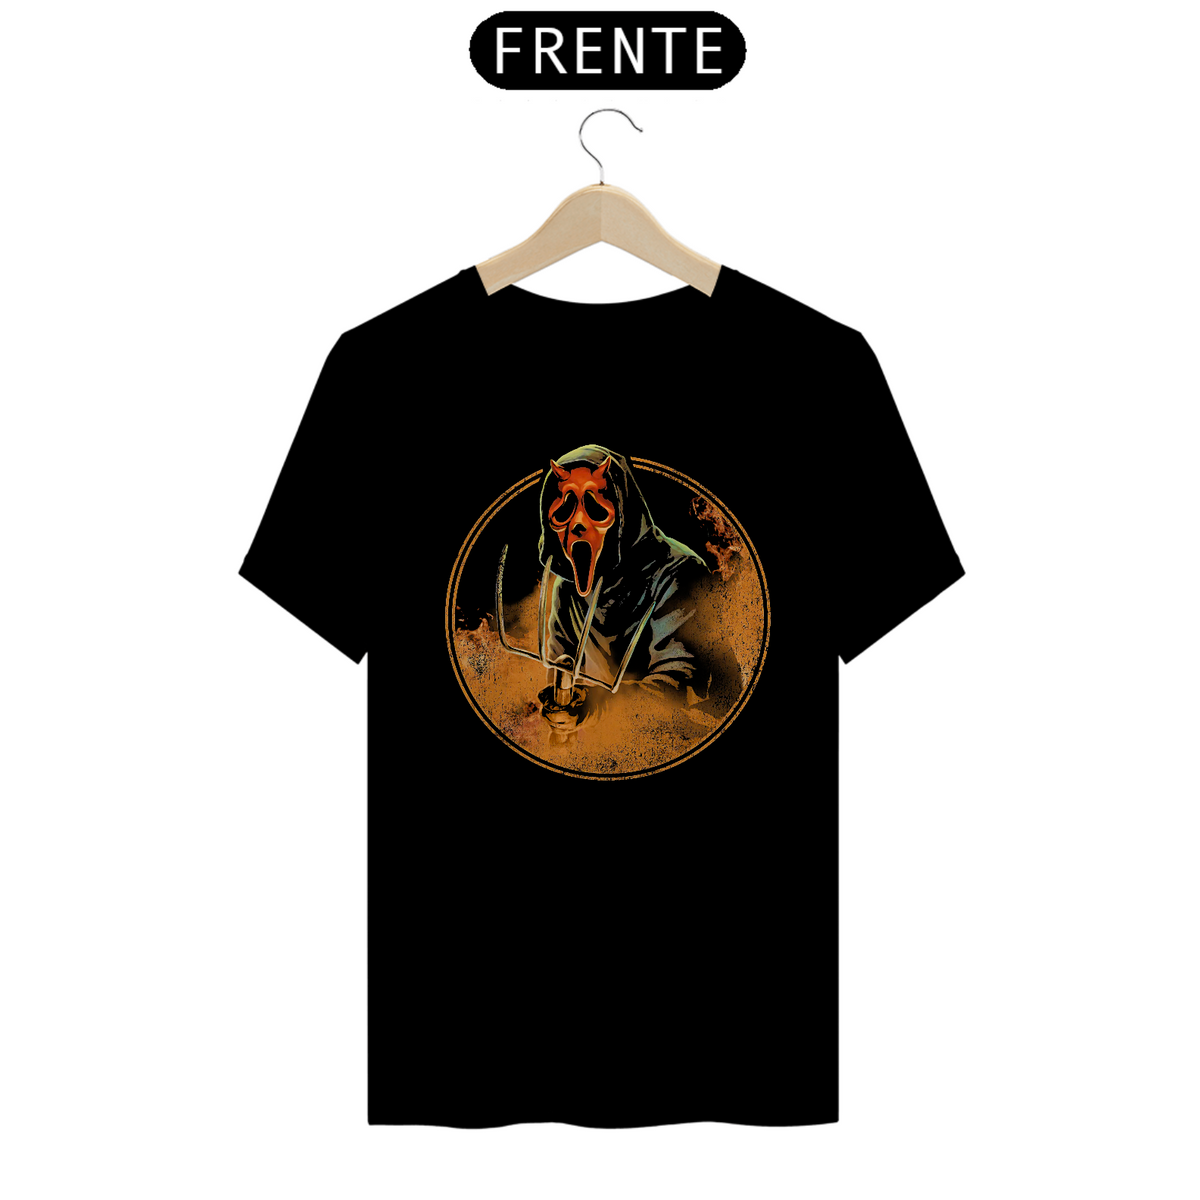 Nome do produto: Camiseta Ghostaface Inferno Filme Pânico Terror Estampa Exclusiva